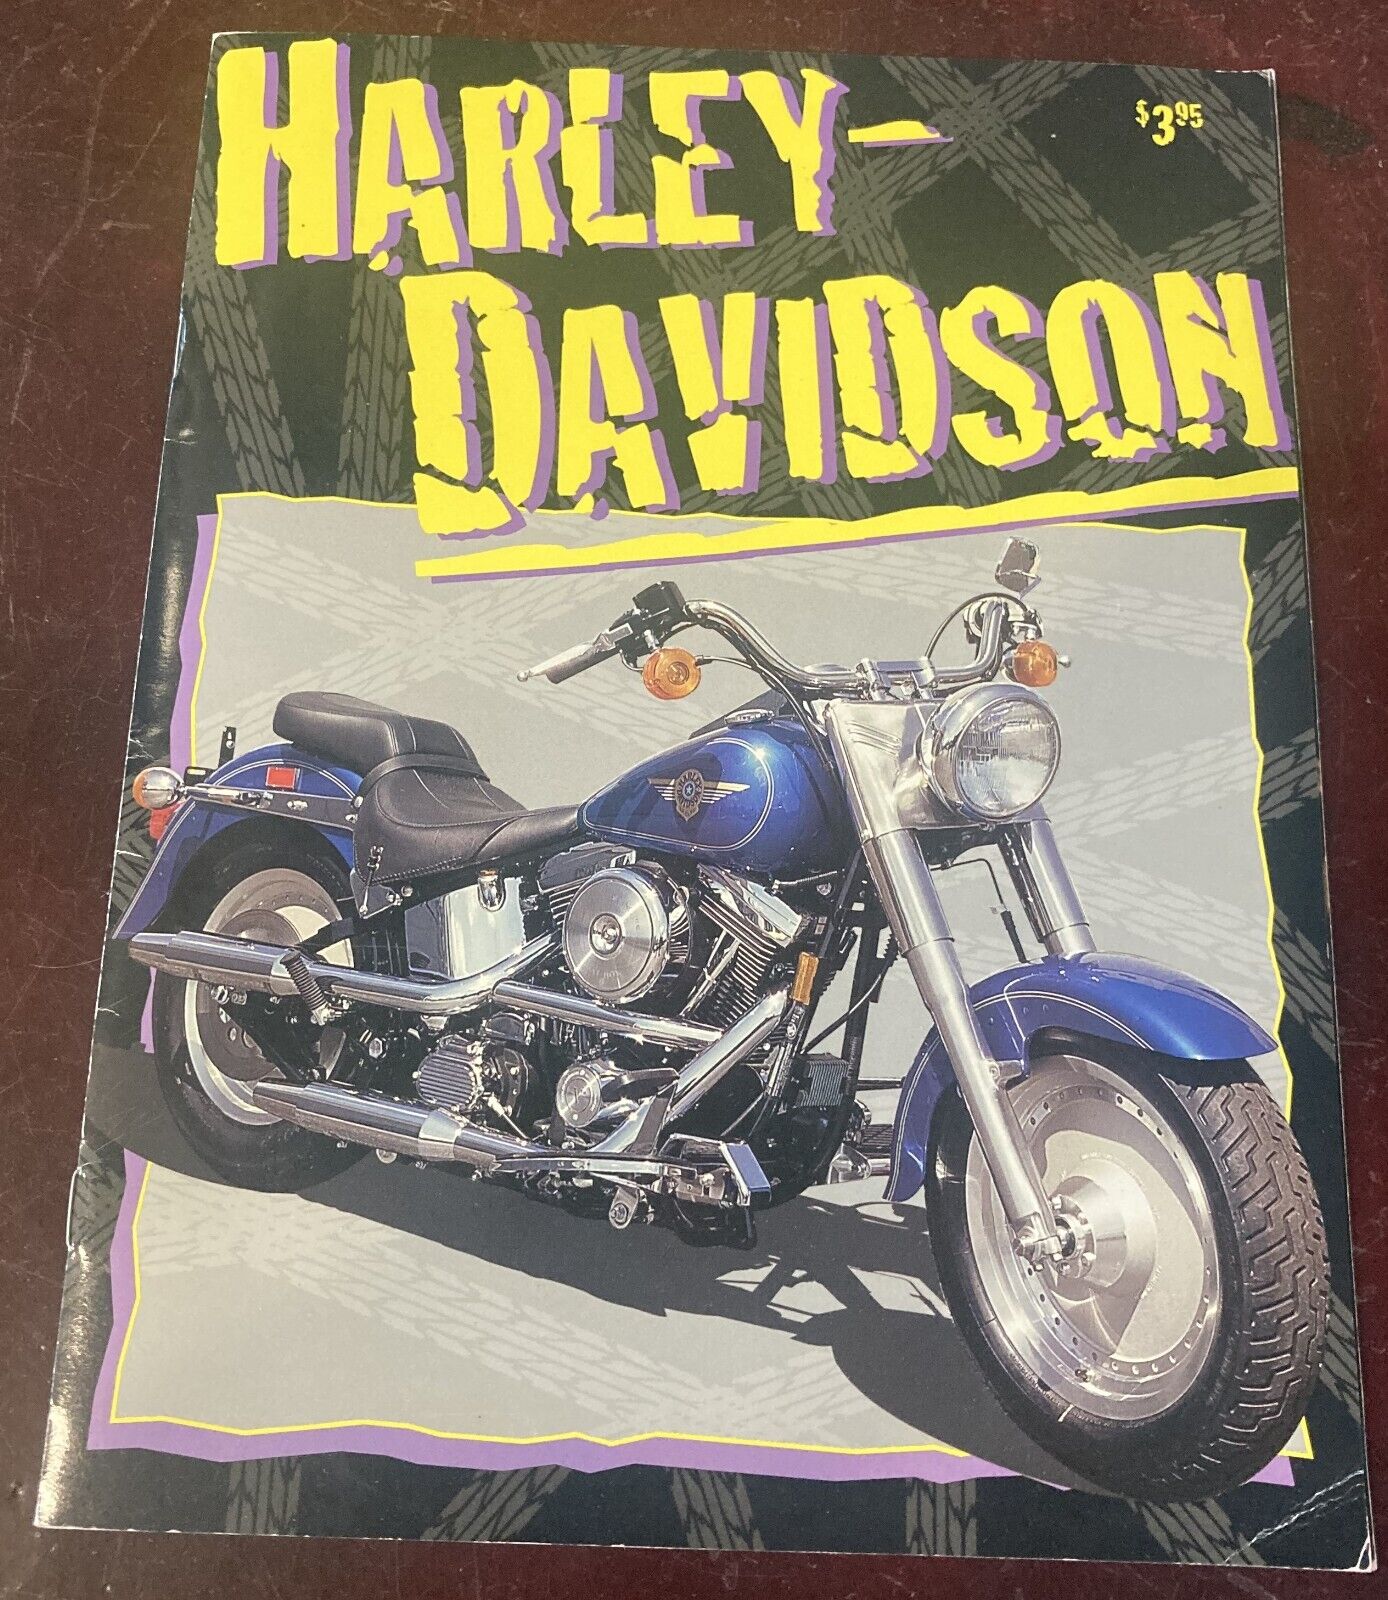 Harley Davidson Publication of the \